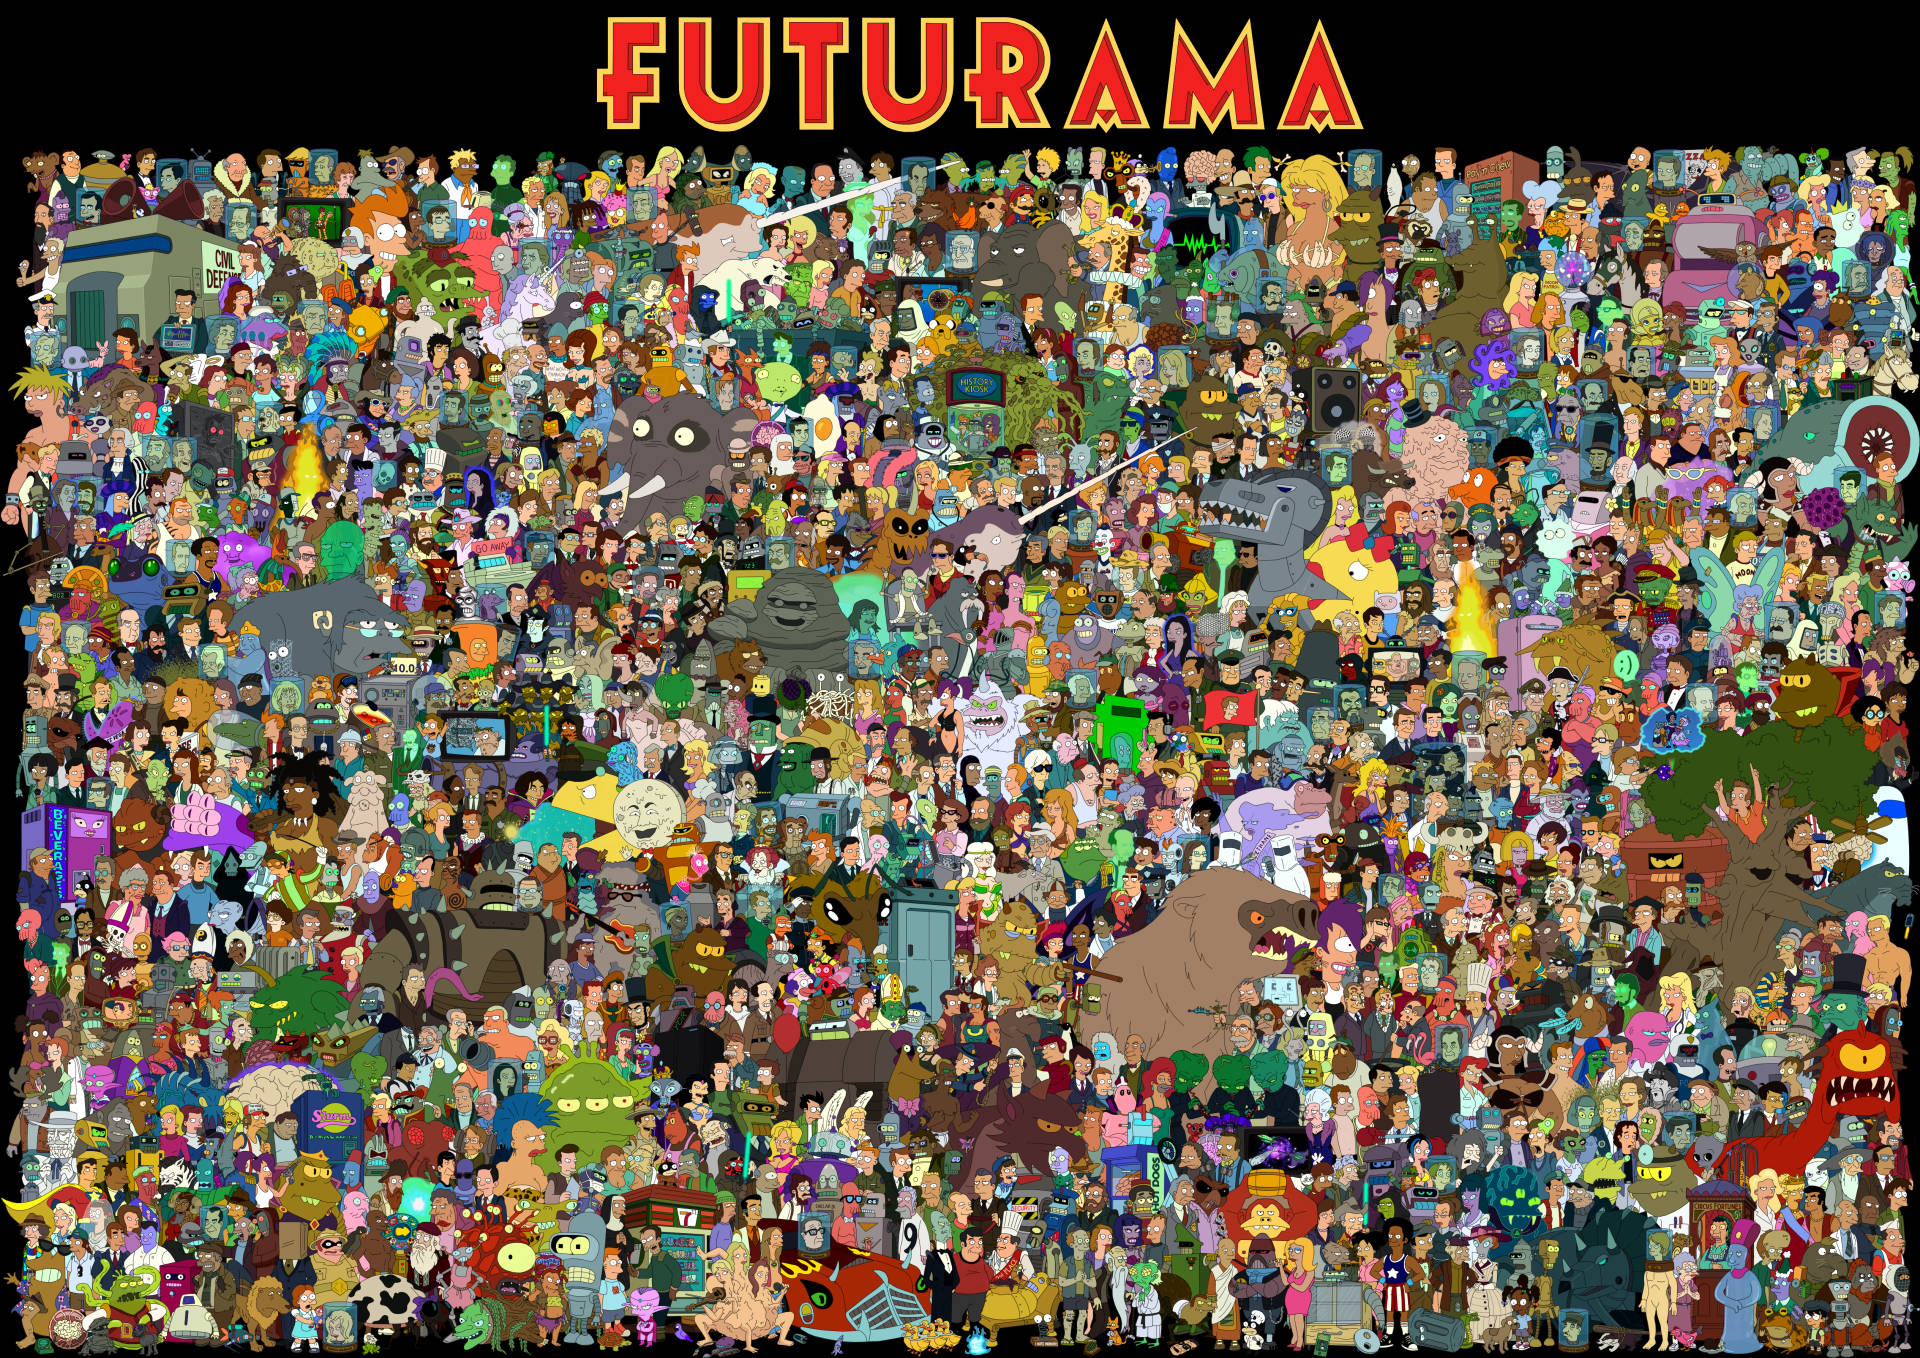 Futurama 1920X1358 Wallpaper and Background Image